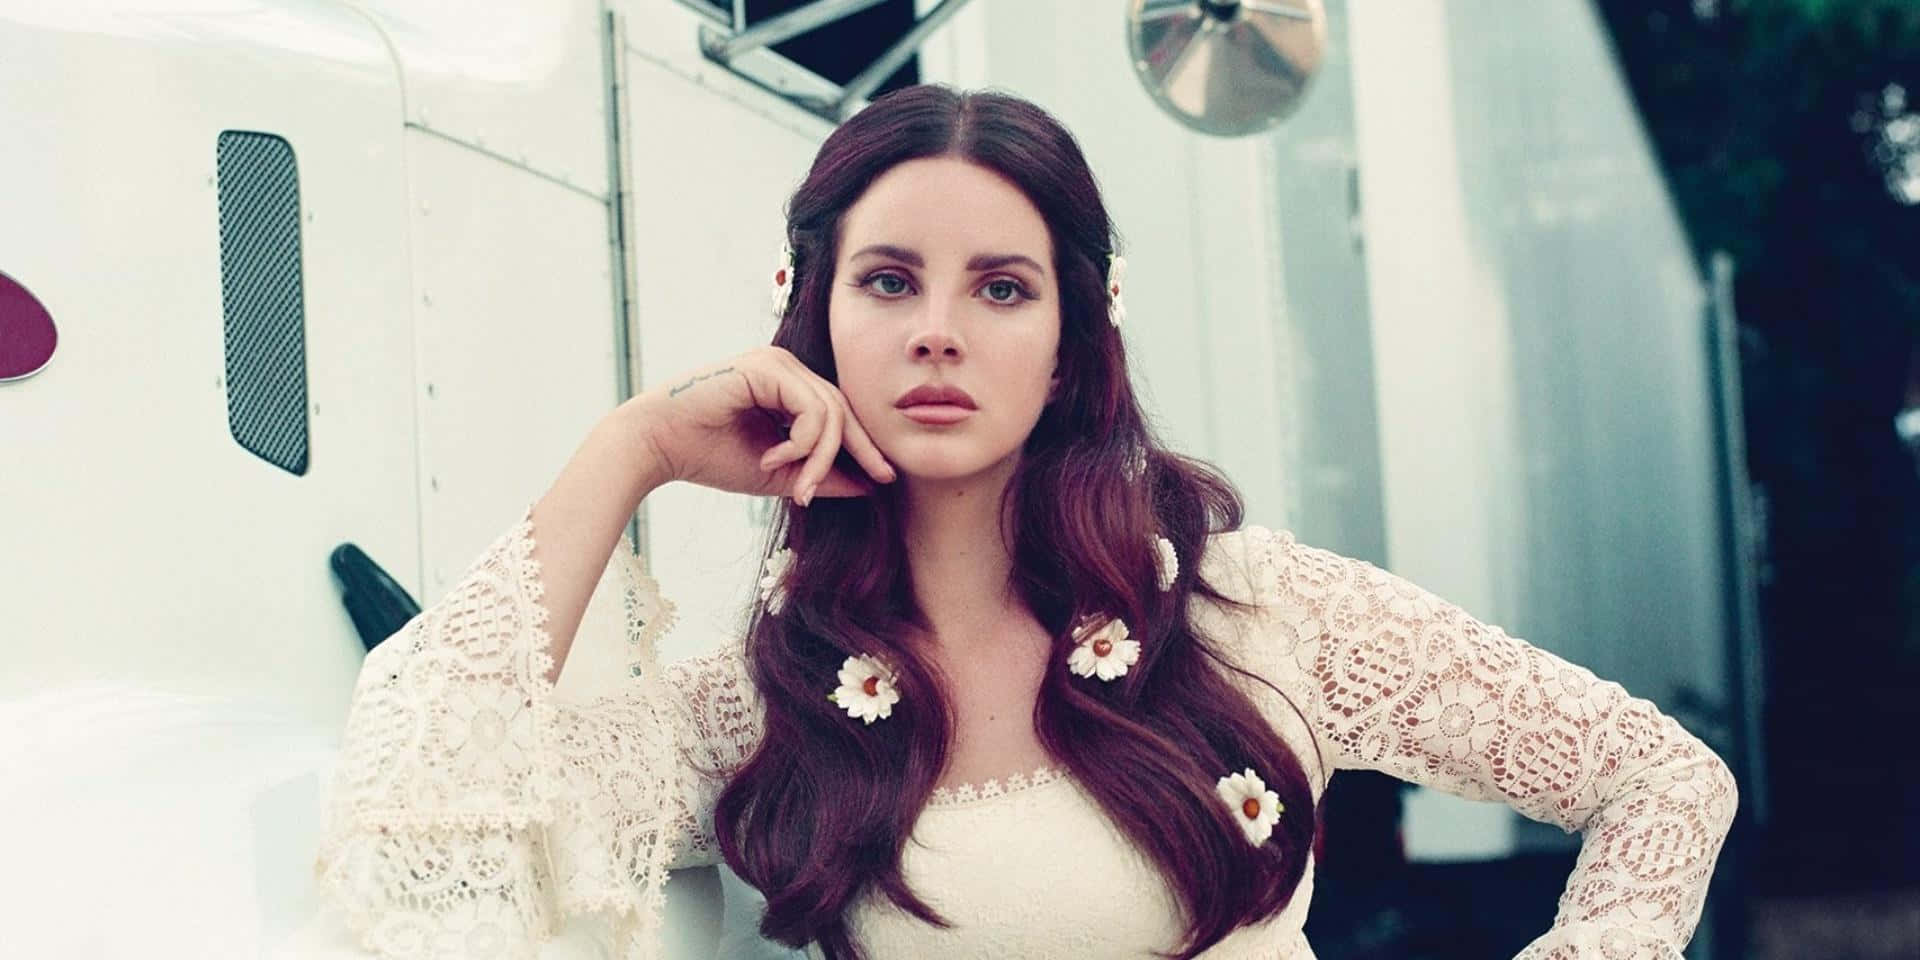 Lana Del Rey Vintage Inspired Portrait Wallpaper